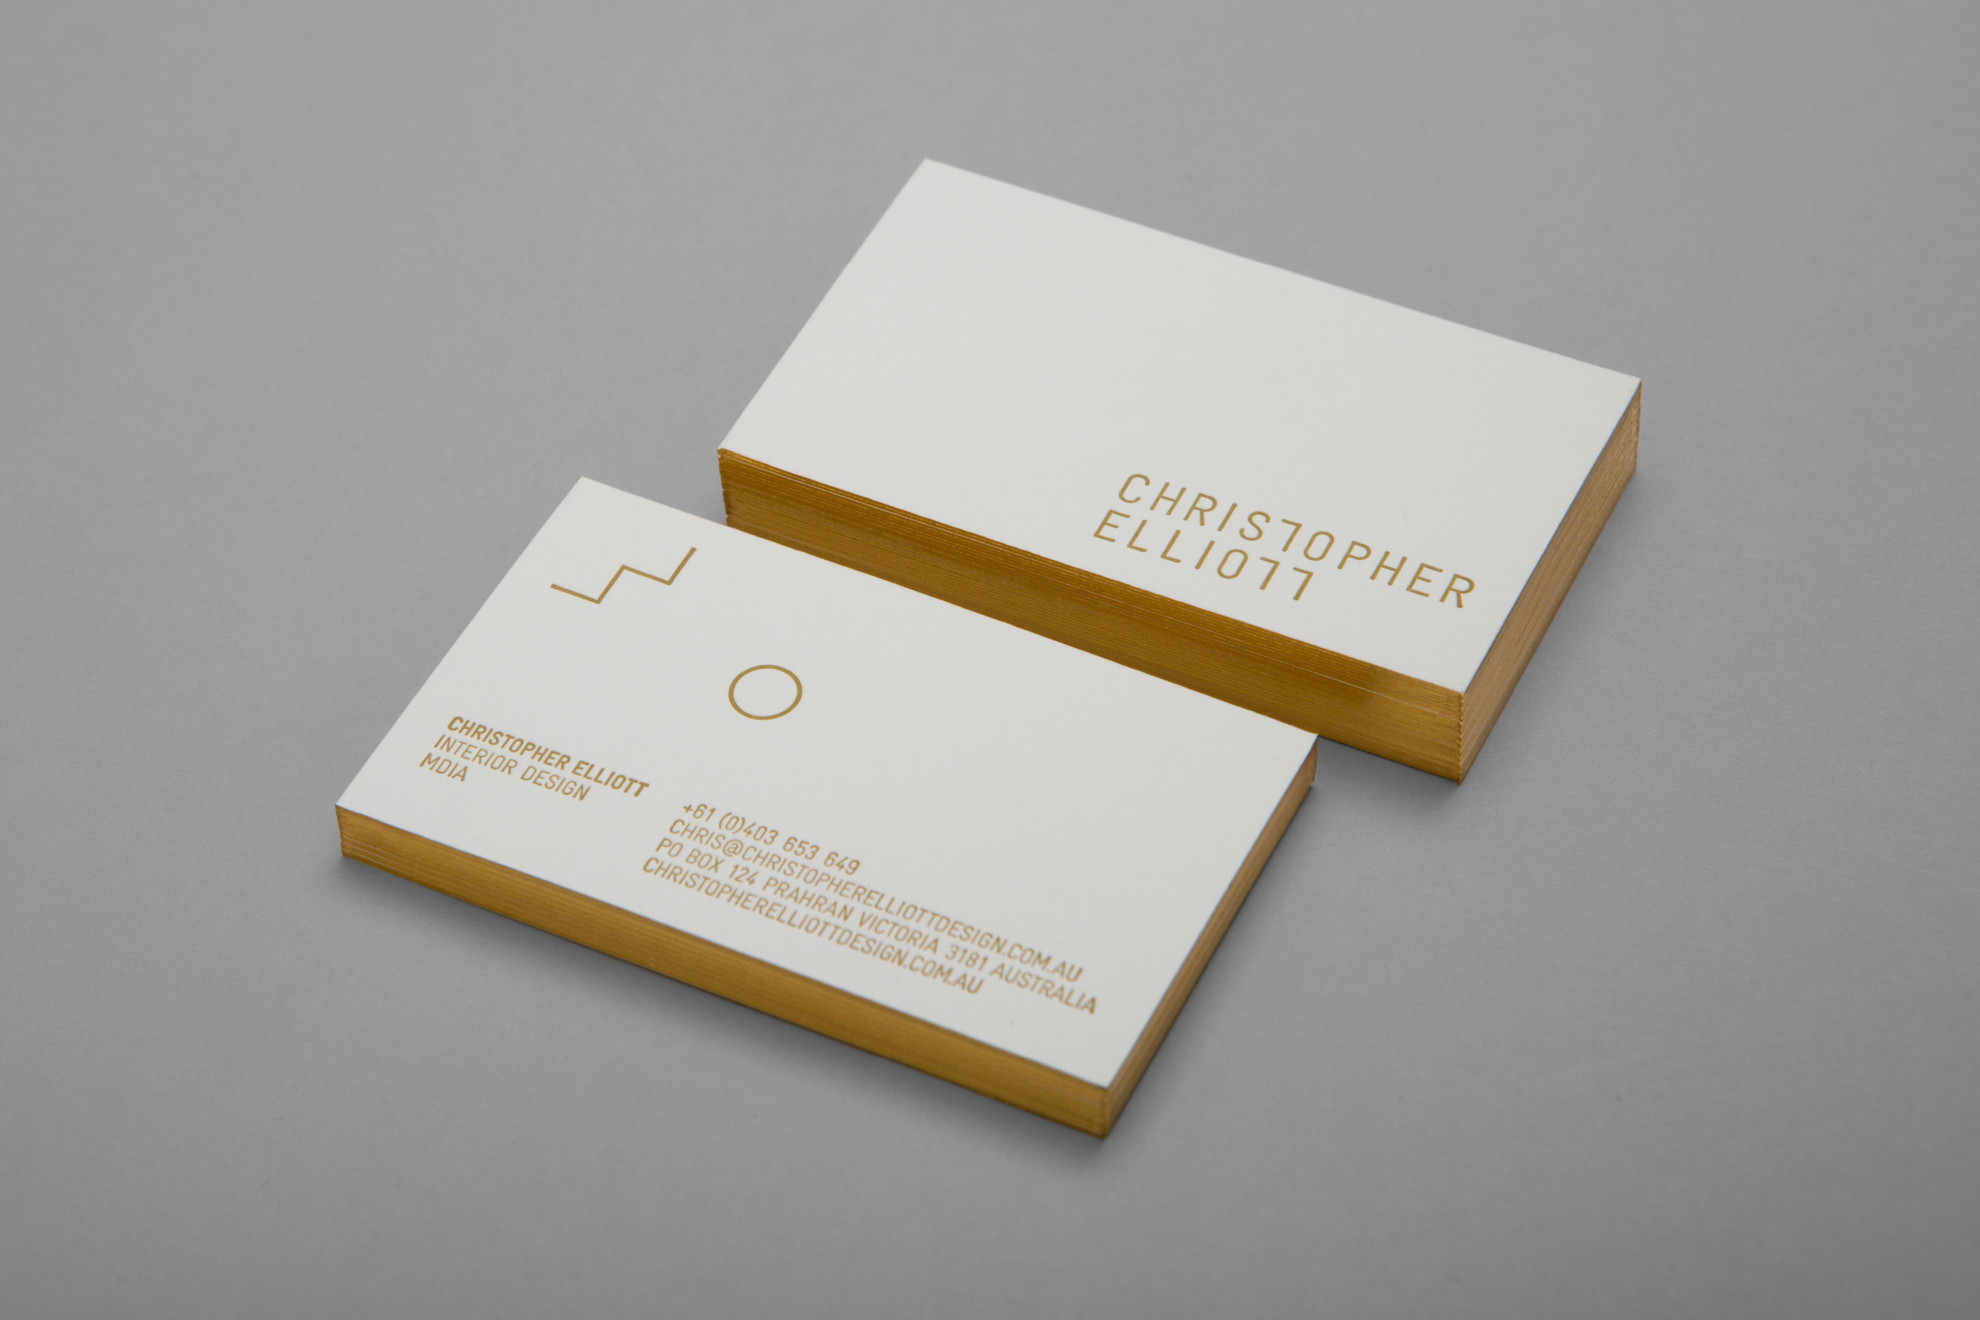 Christopher Elliott Design - Business Card